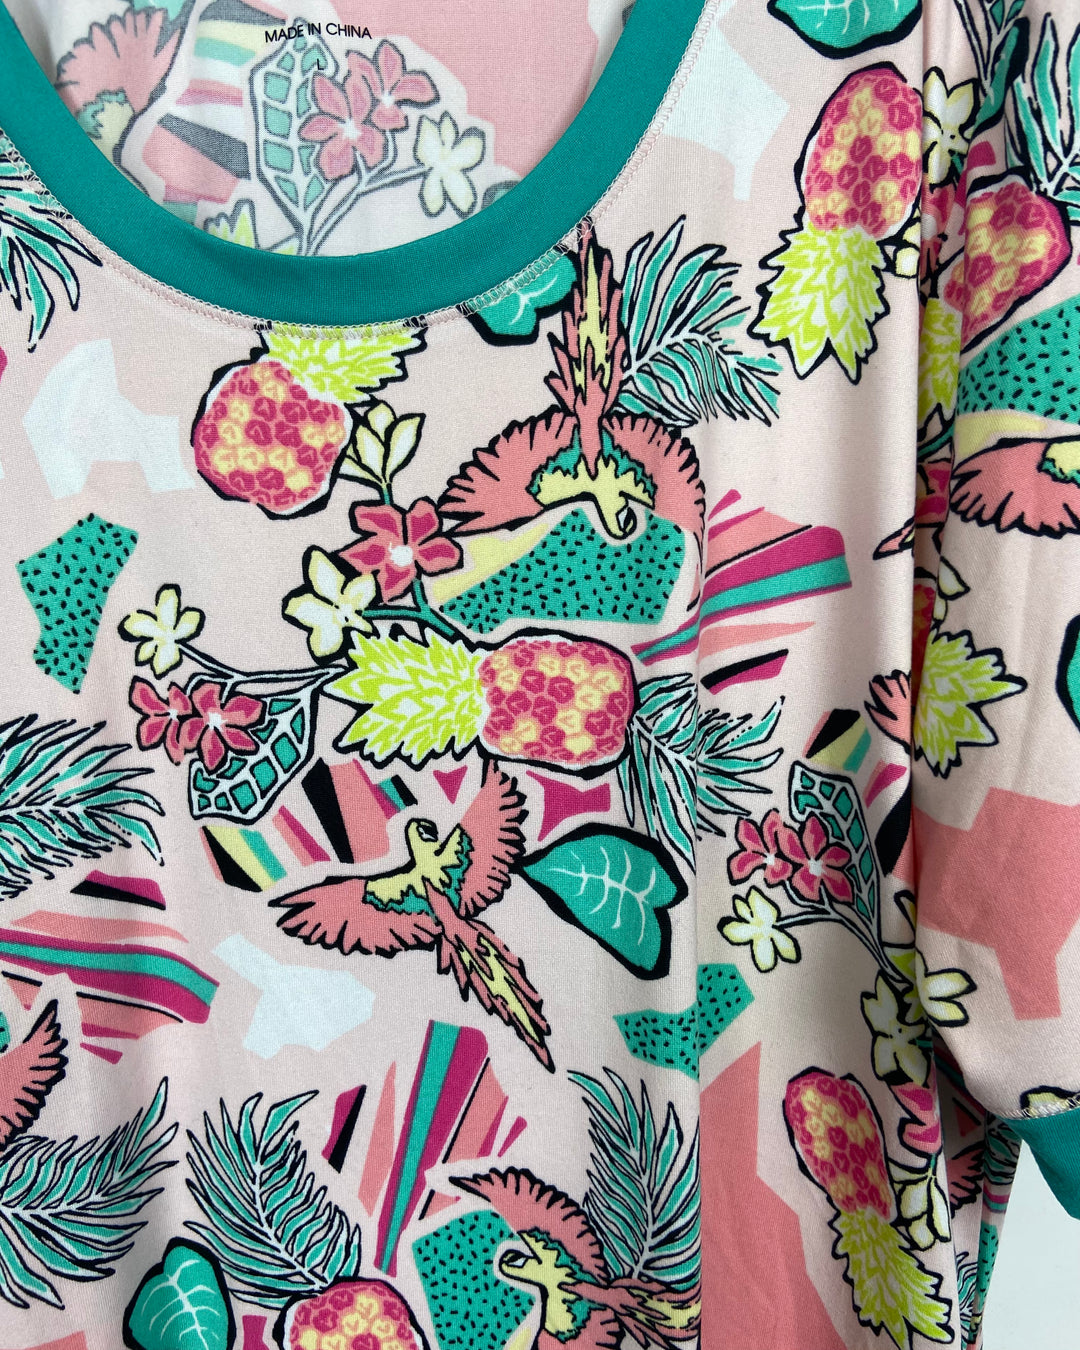 Pink and Green Tropical Print Dress - Small/Medium